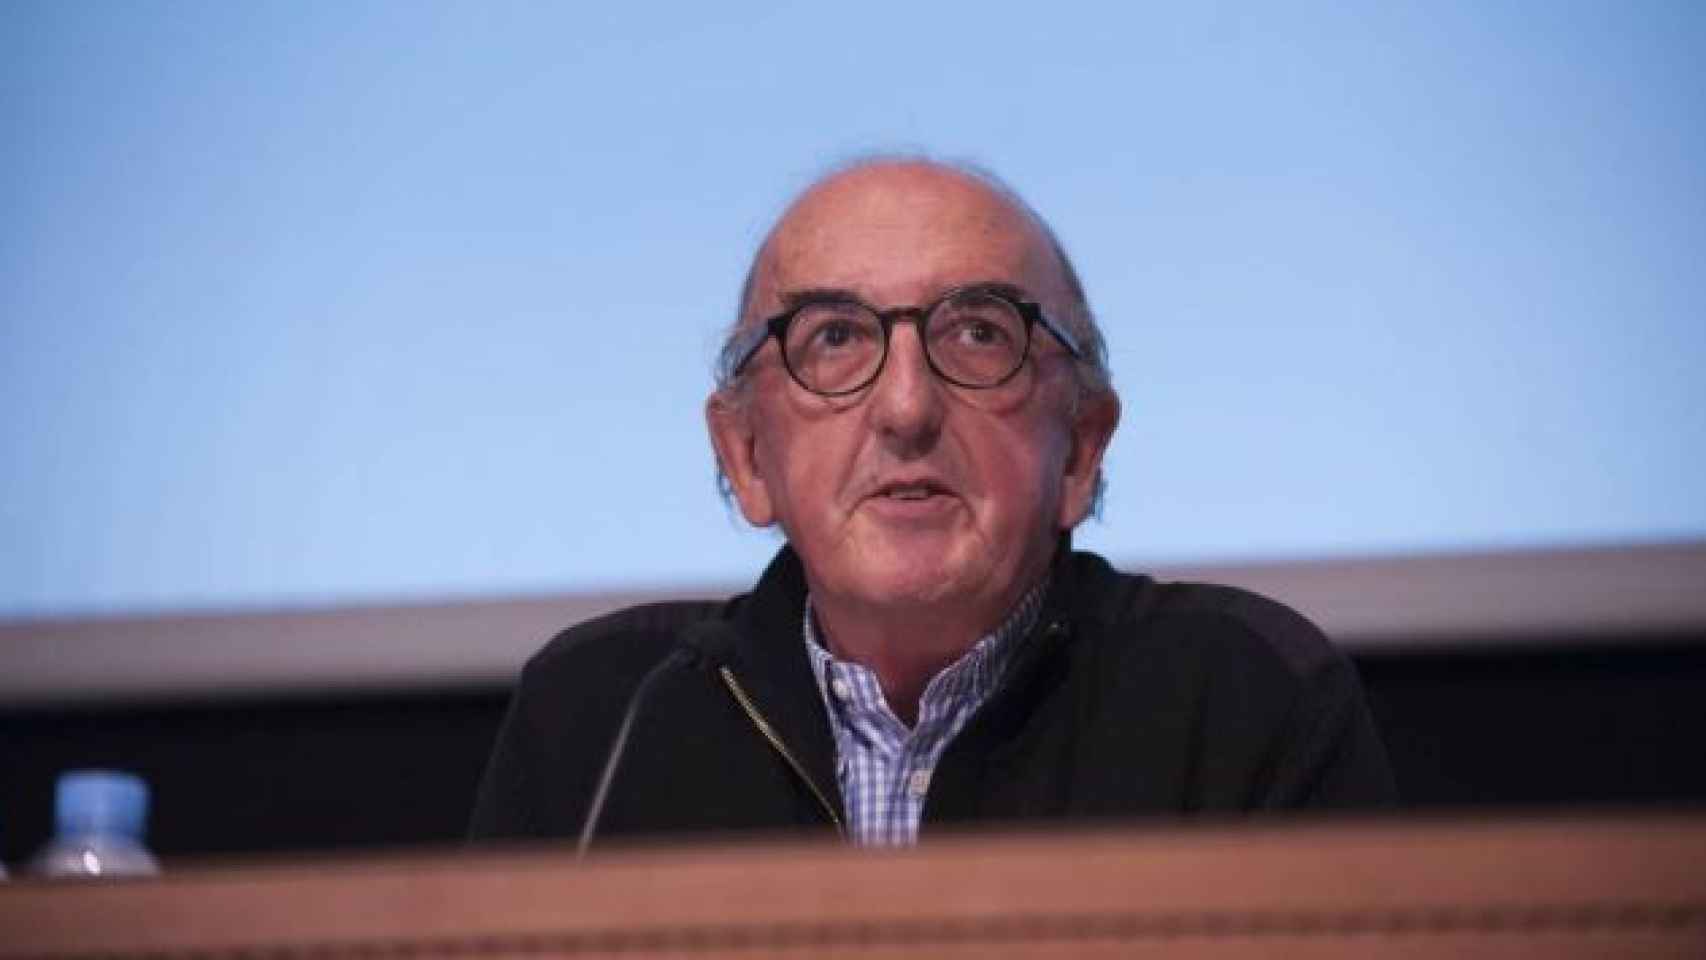 Jaume Roures, fundador de Mediapro.